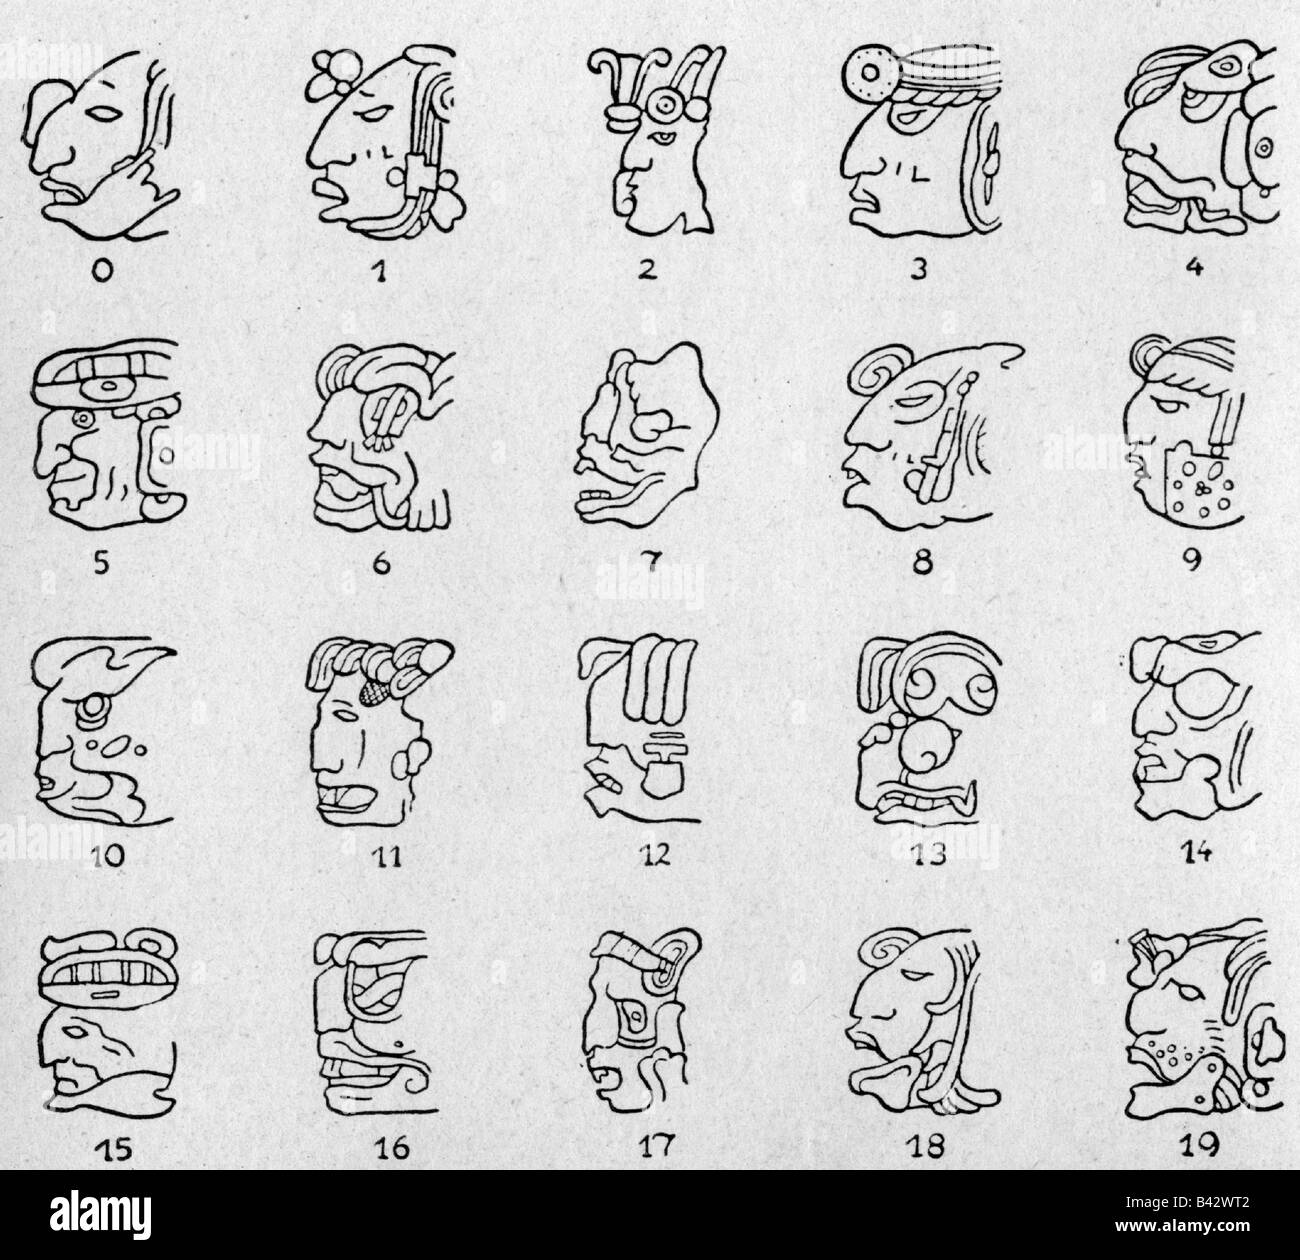 writing, characters, Maya hieroglyphs, figures, 0 - 19, J.E. Thompson, 'Civilization of the Mayas', 1927, mesoamerican, scripture, writting, number, figure, , Stock Photo